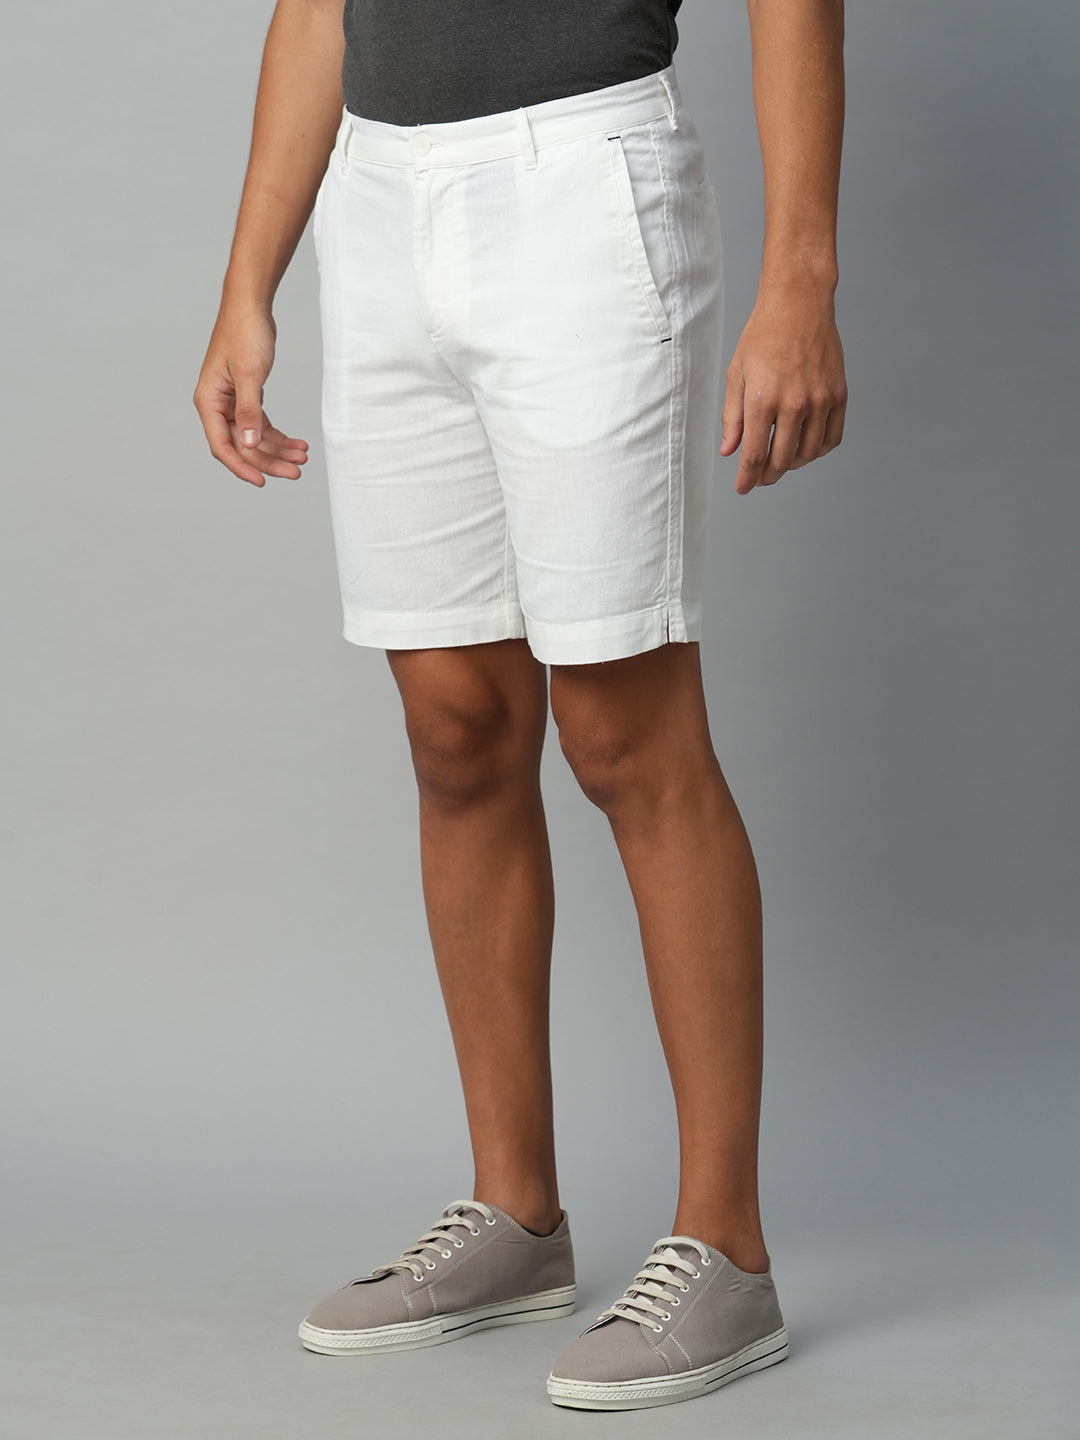 Men's White Cotton Linen Regular Fit Shorts